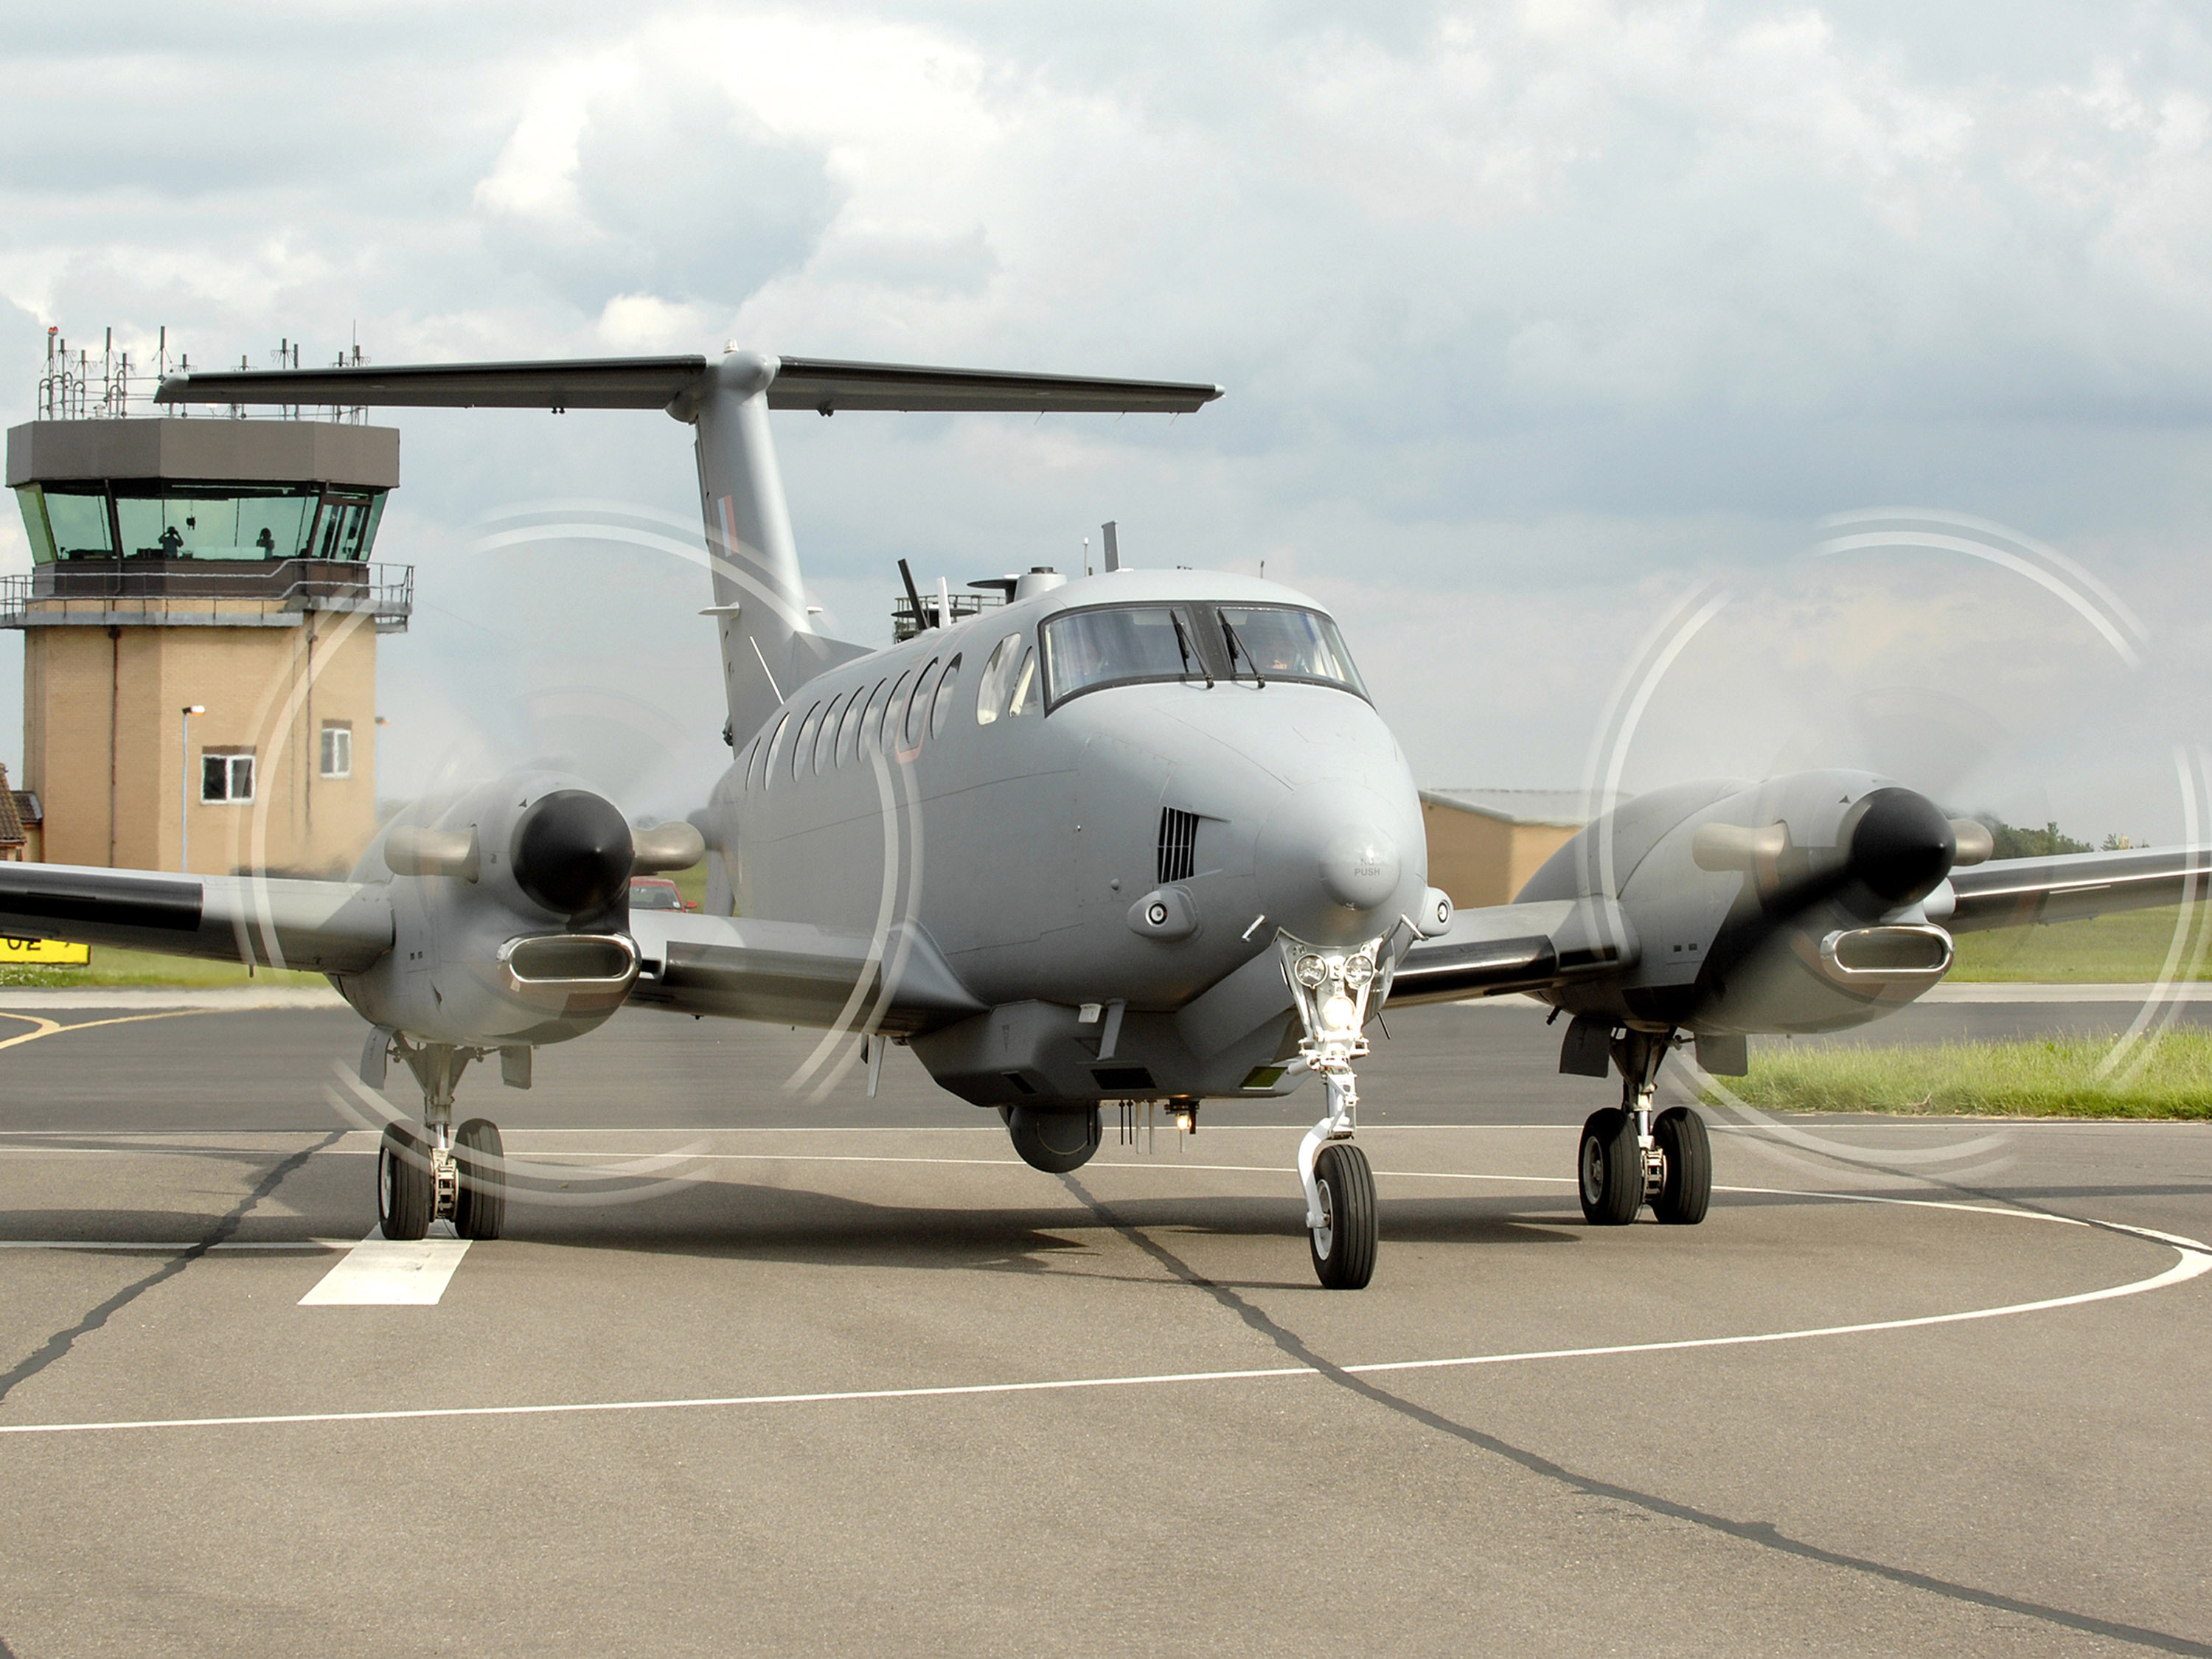 Shadow R1 ISTAR Aircraft at RAF Waddington MOD 45153426